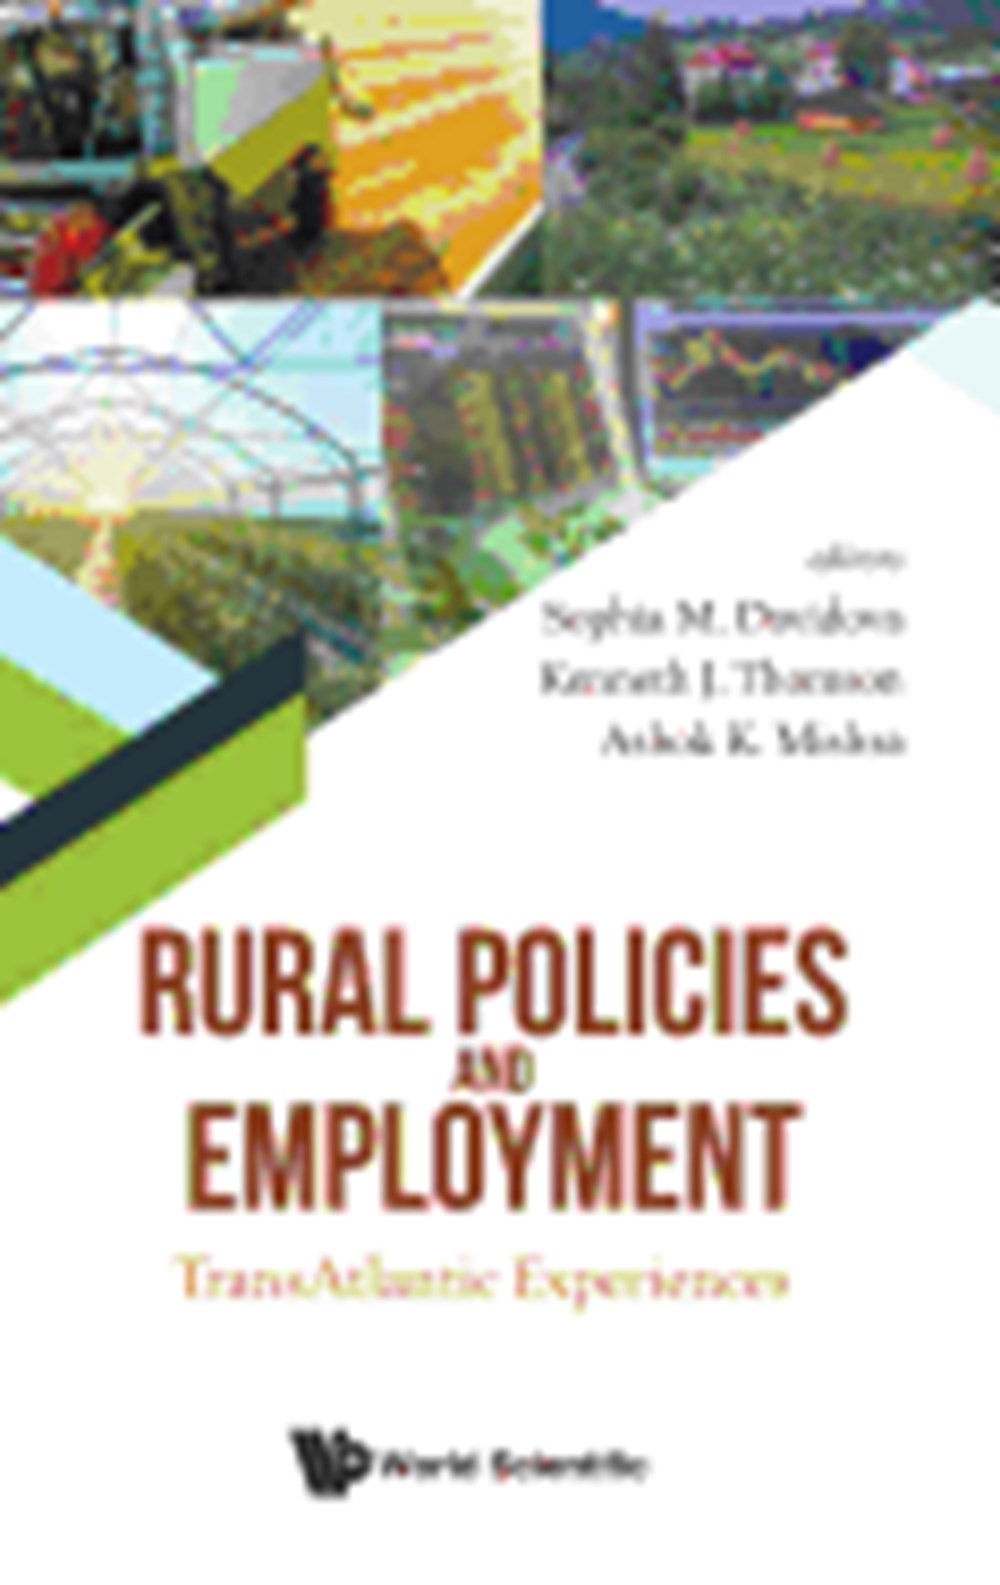 Rural Policies and Employment: Transatlantic Experiences